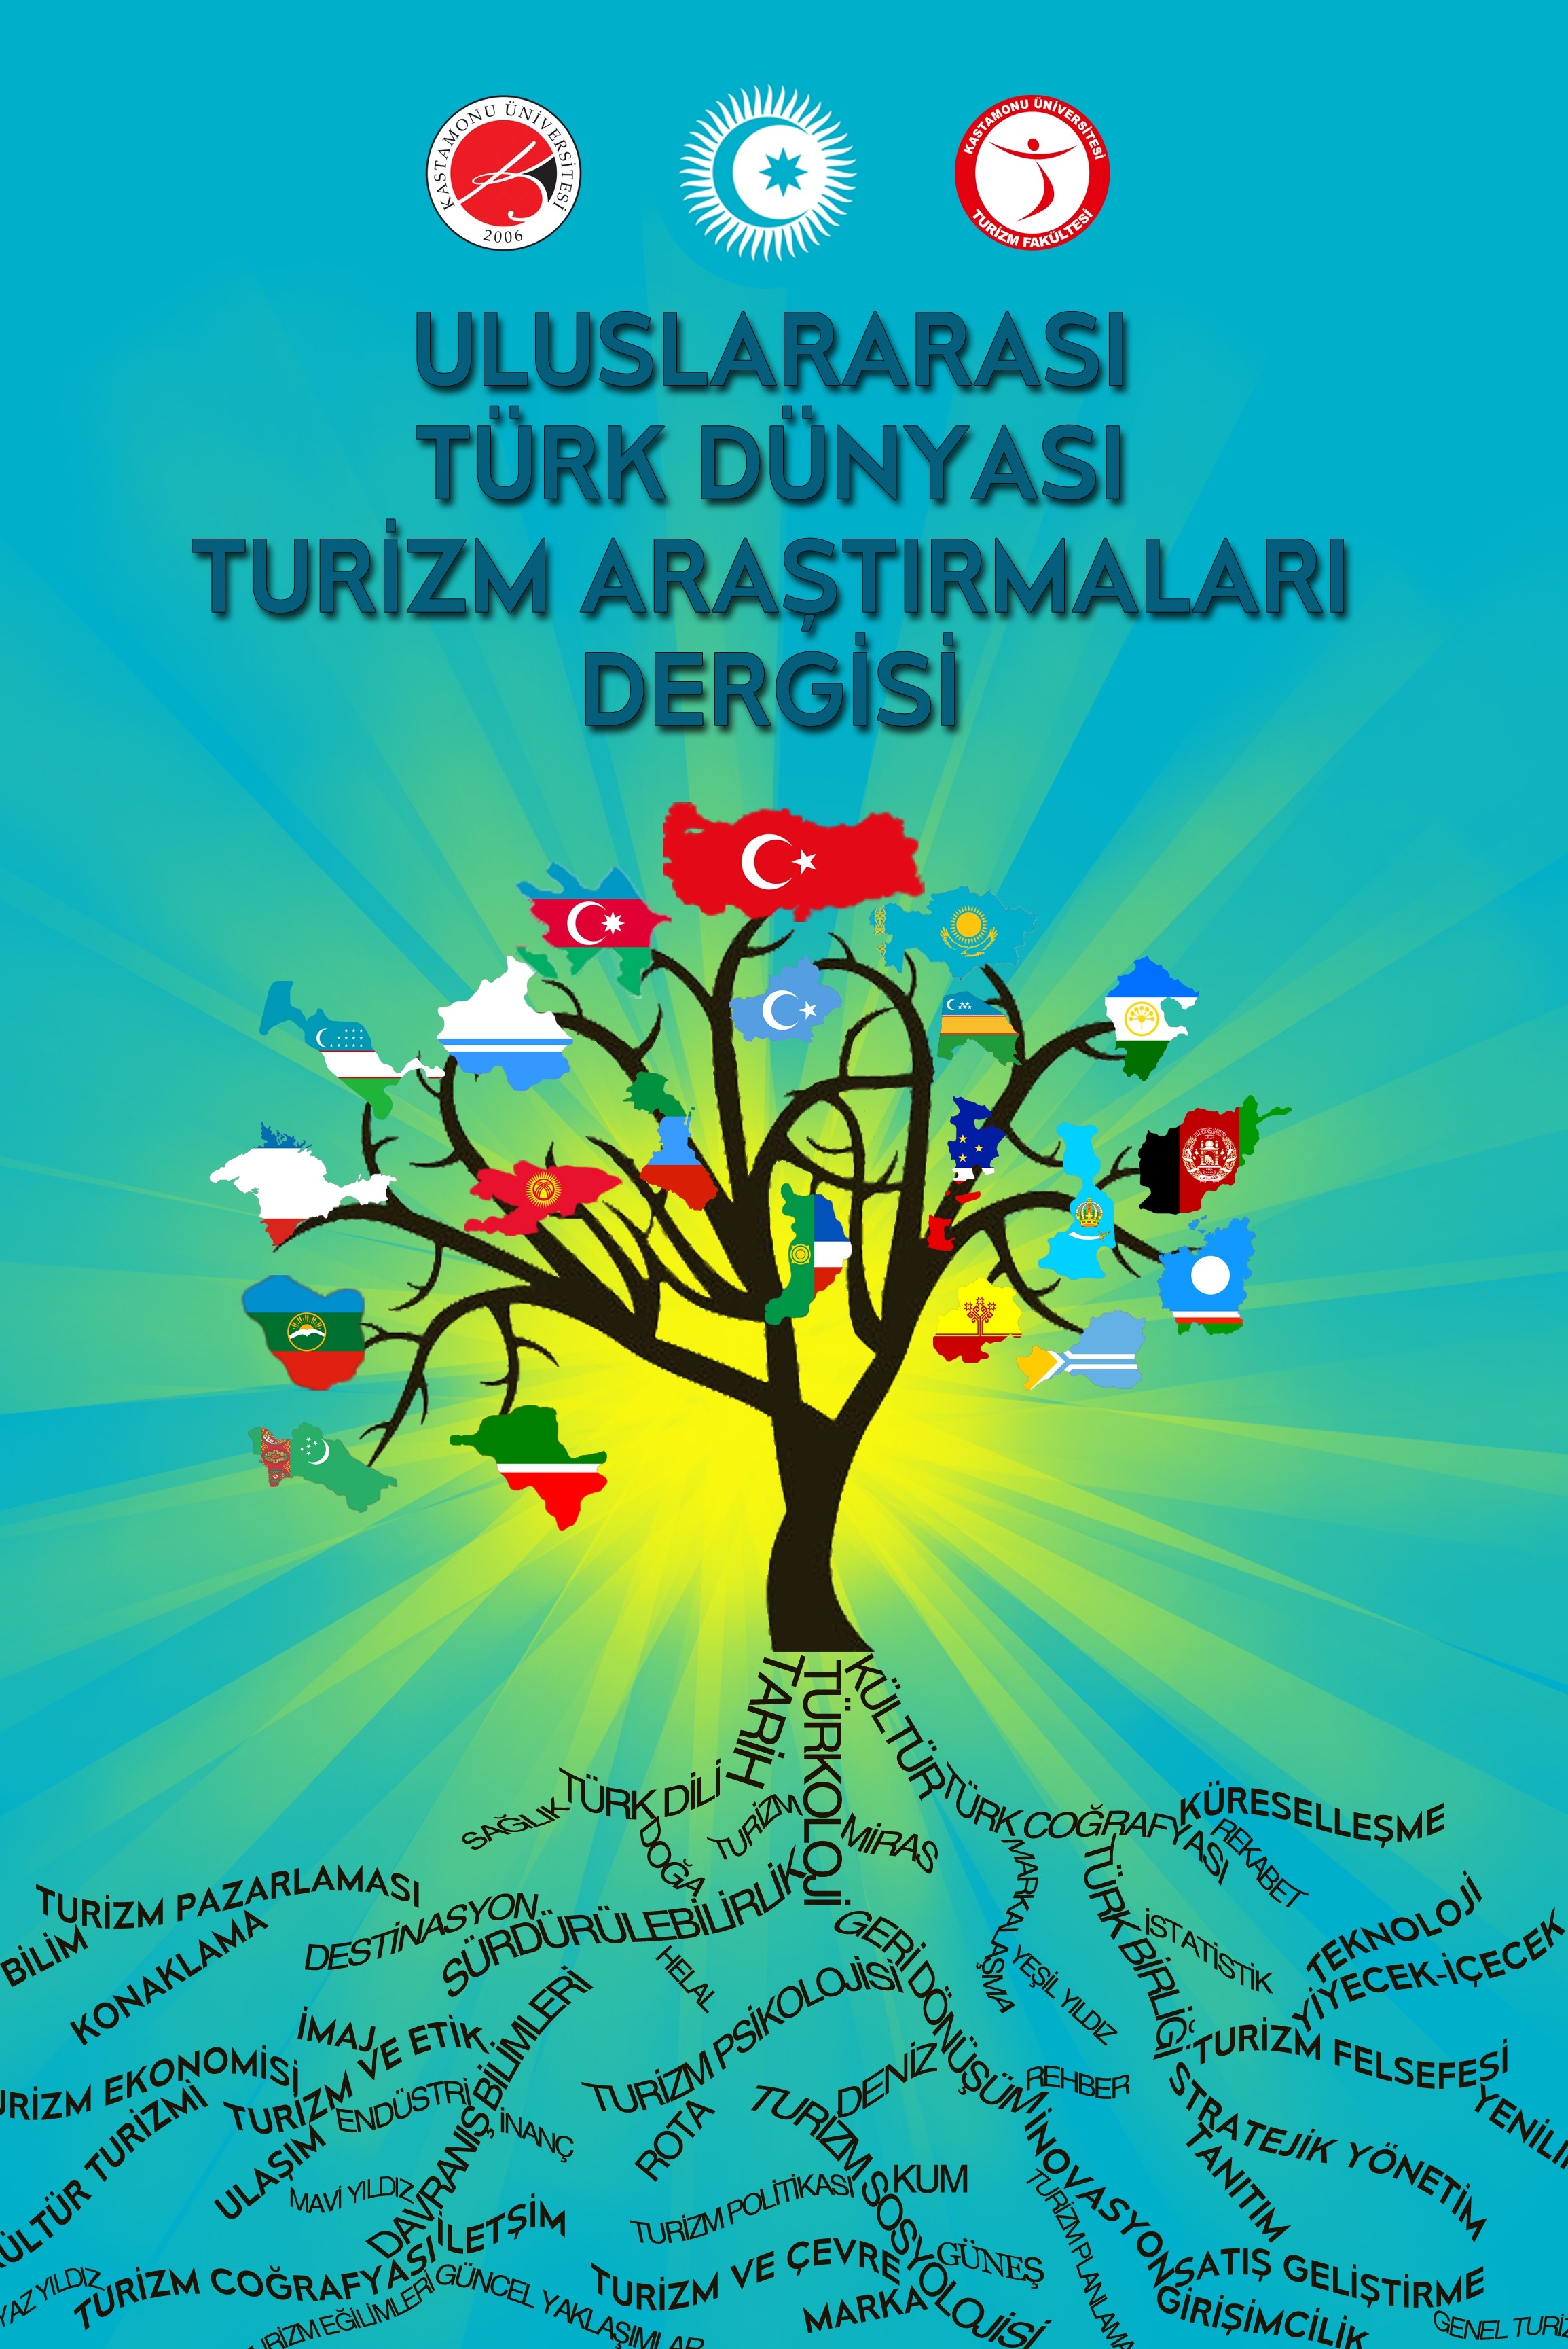 International Journal of Turkic World Tourism Studies